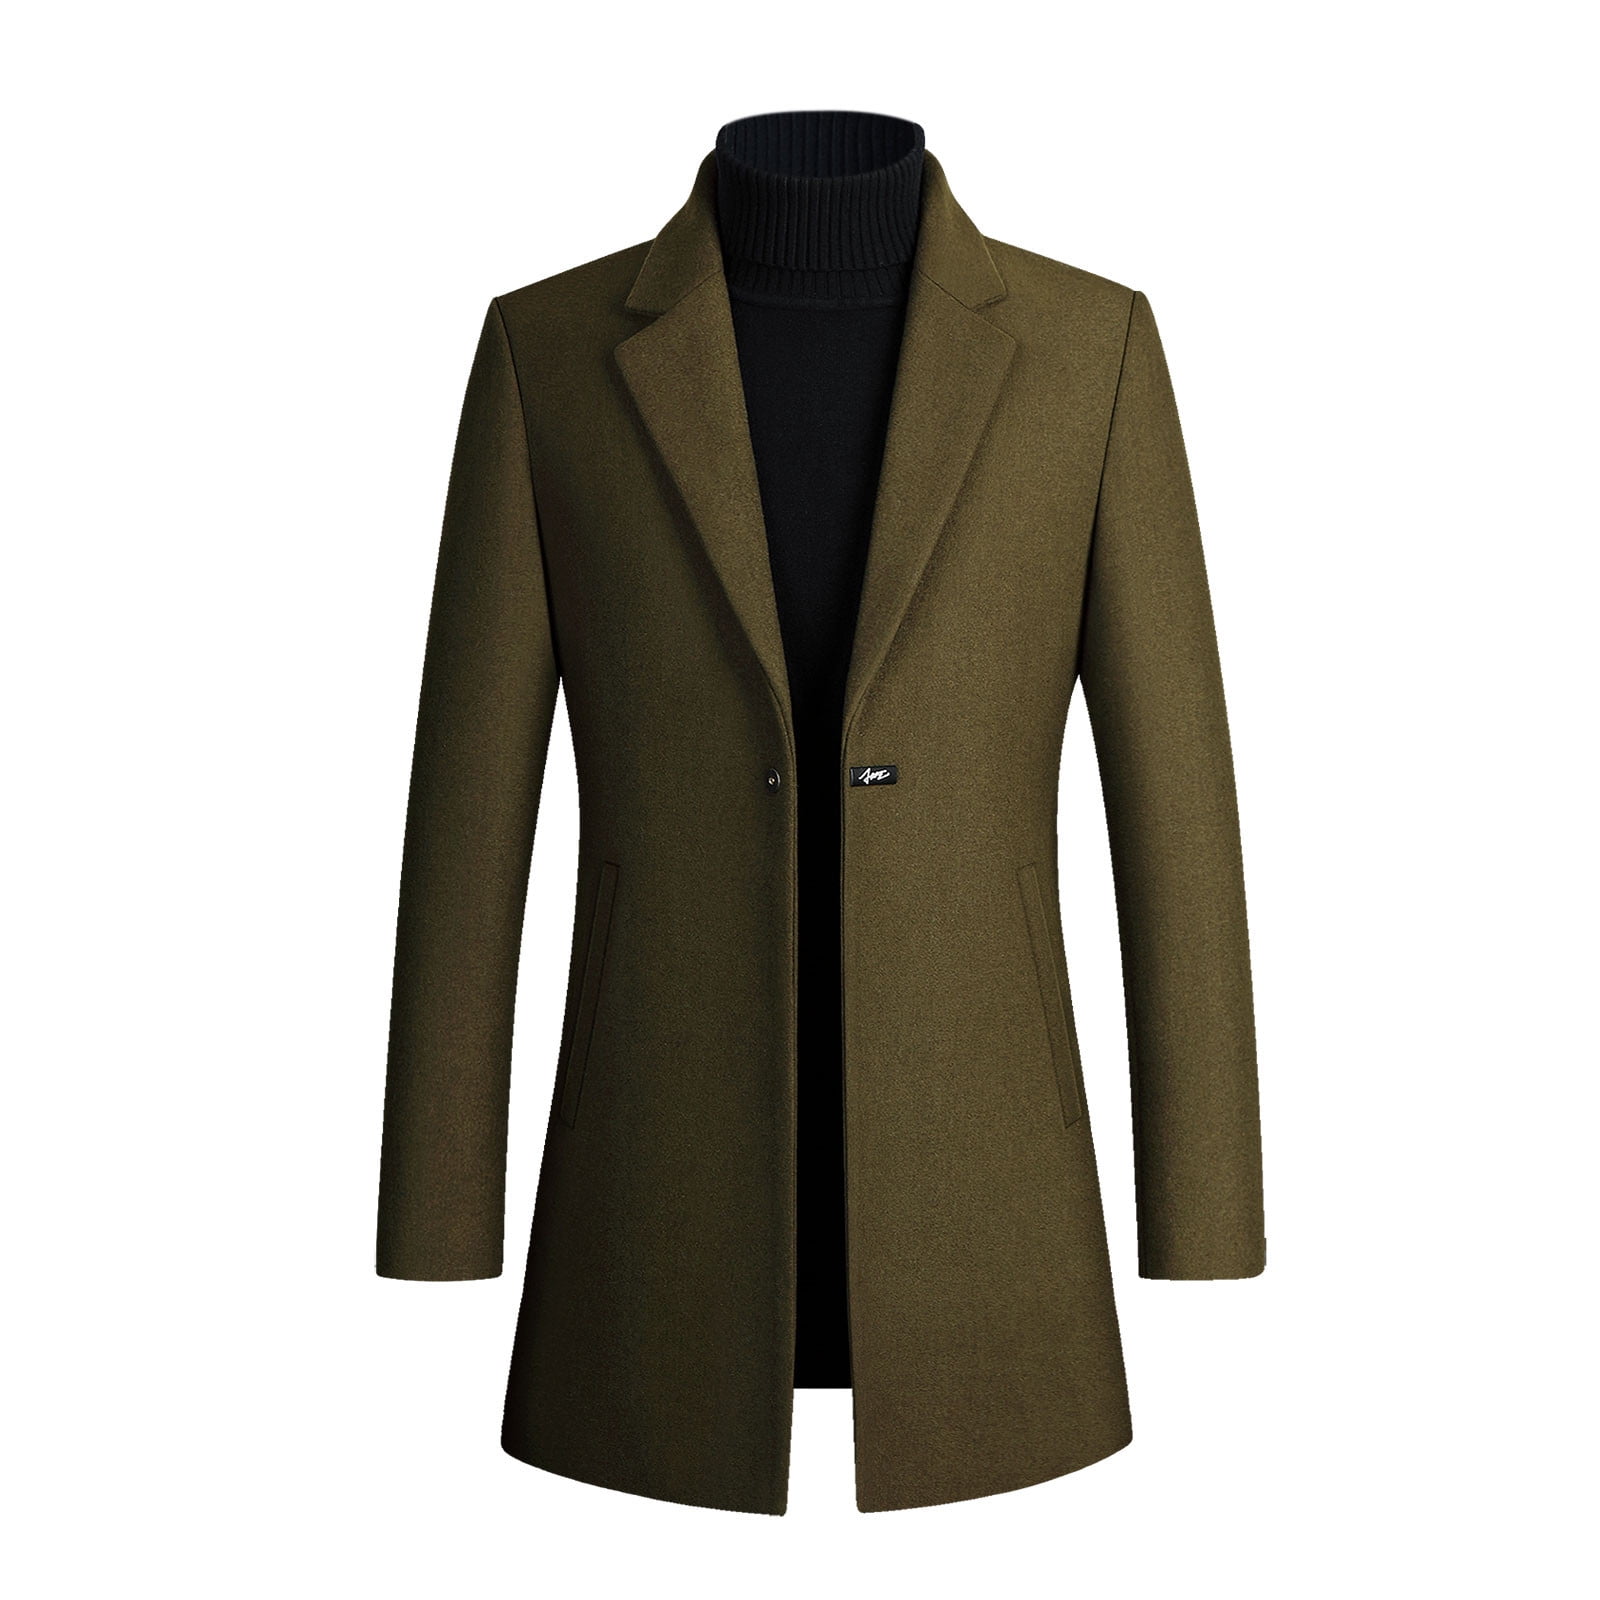 iOPQO blazer jackets for men Men's Casual Plus Size Military Jacket Cotton  Solid Coat Men Zipper Jacket Khaki XL 